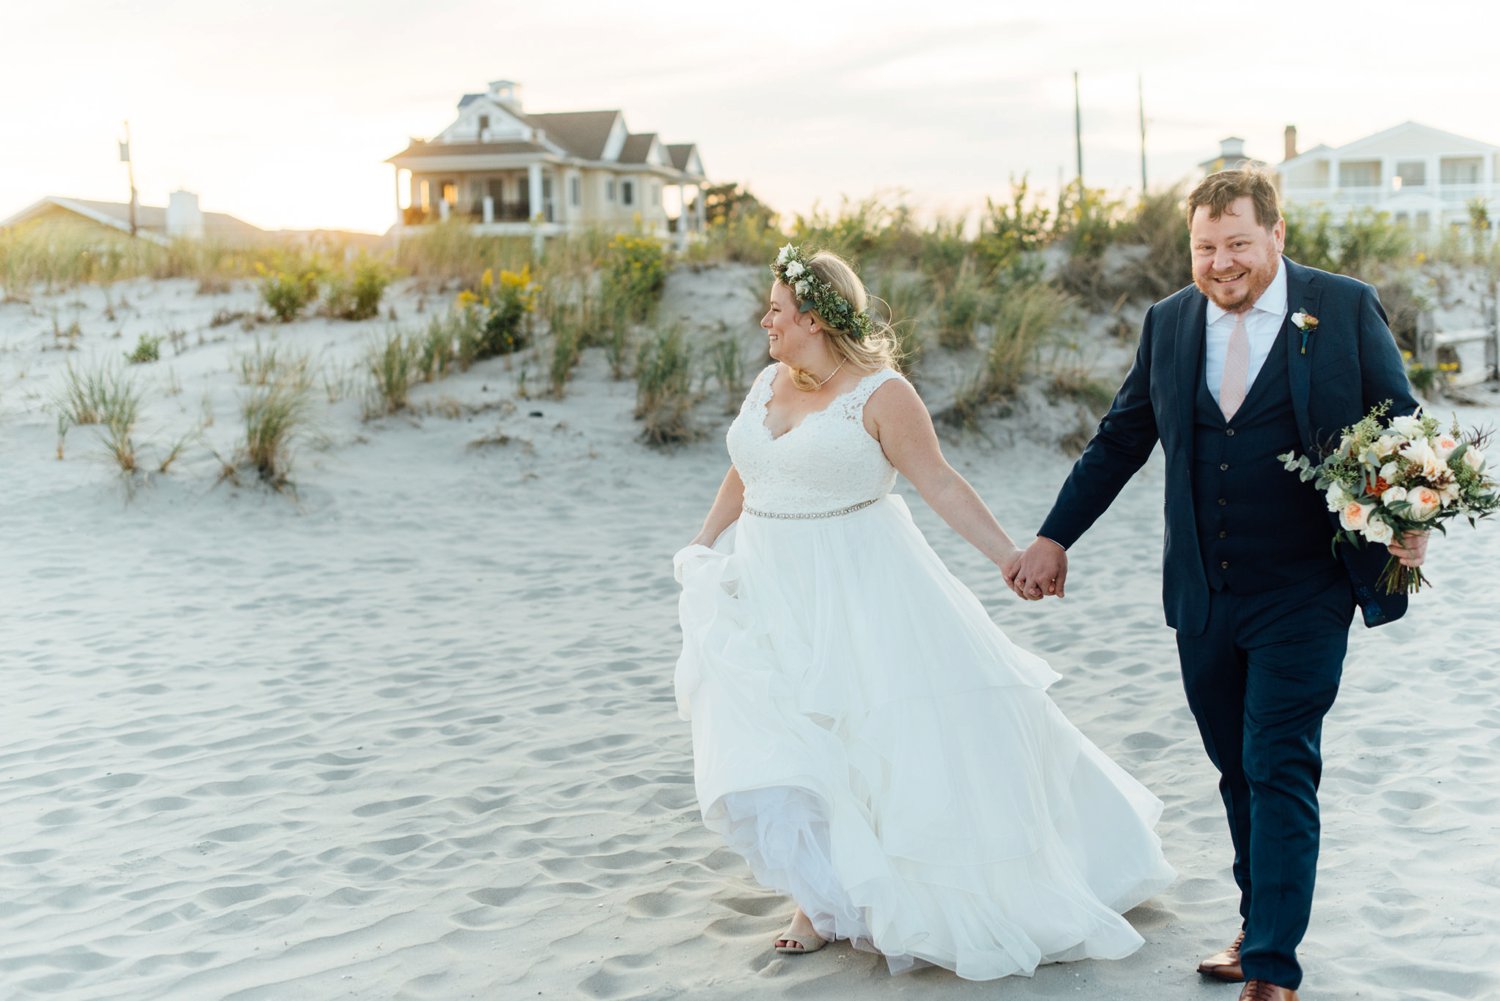 Rose + Corey - Ocean City Wedding - New Jersey Wedding Photographer - Alison Dunn Photography photo